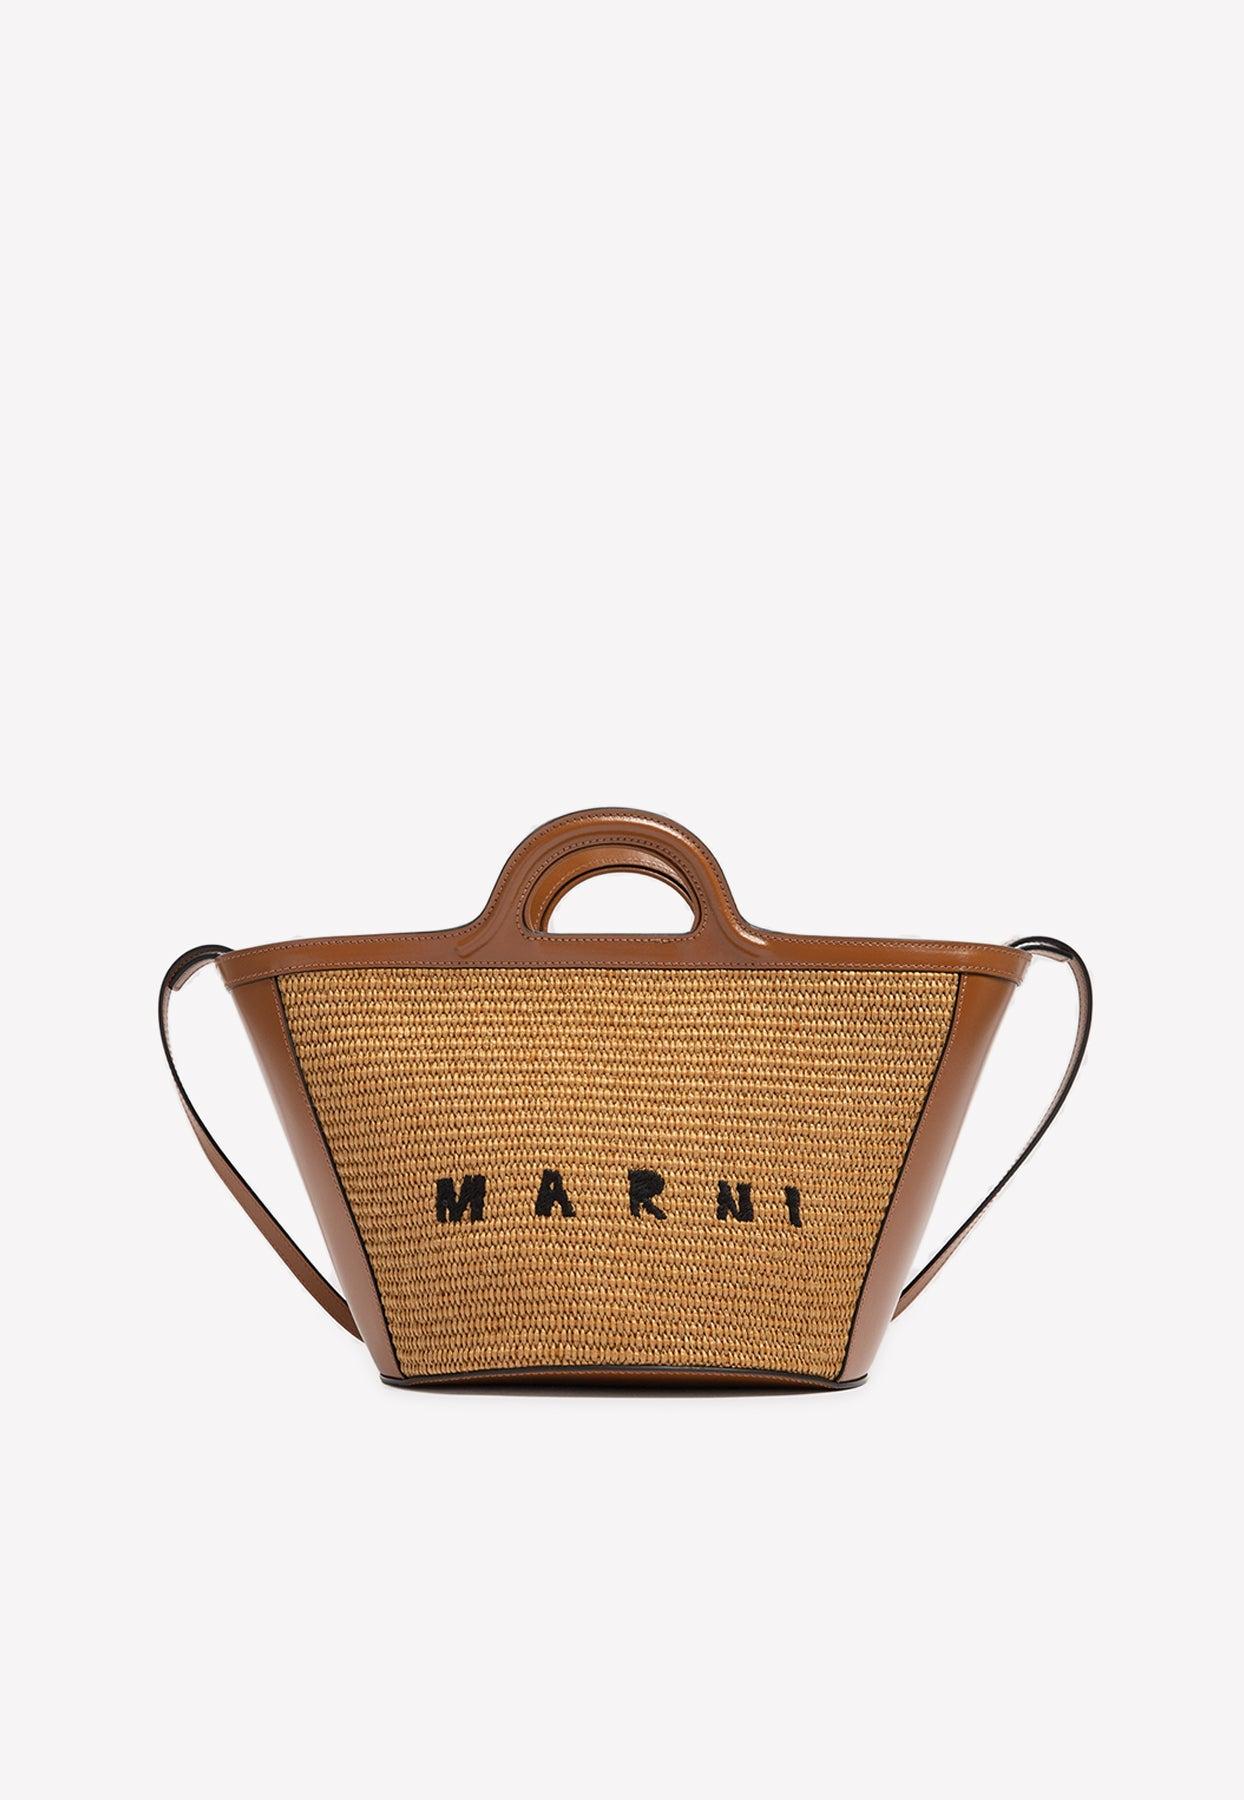 Marni Tropical Small Top Handle Bag in Natural | Lyst